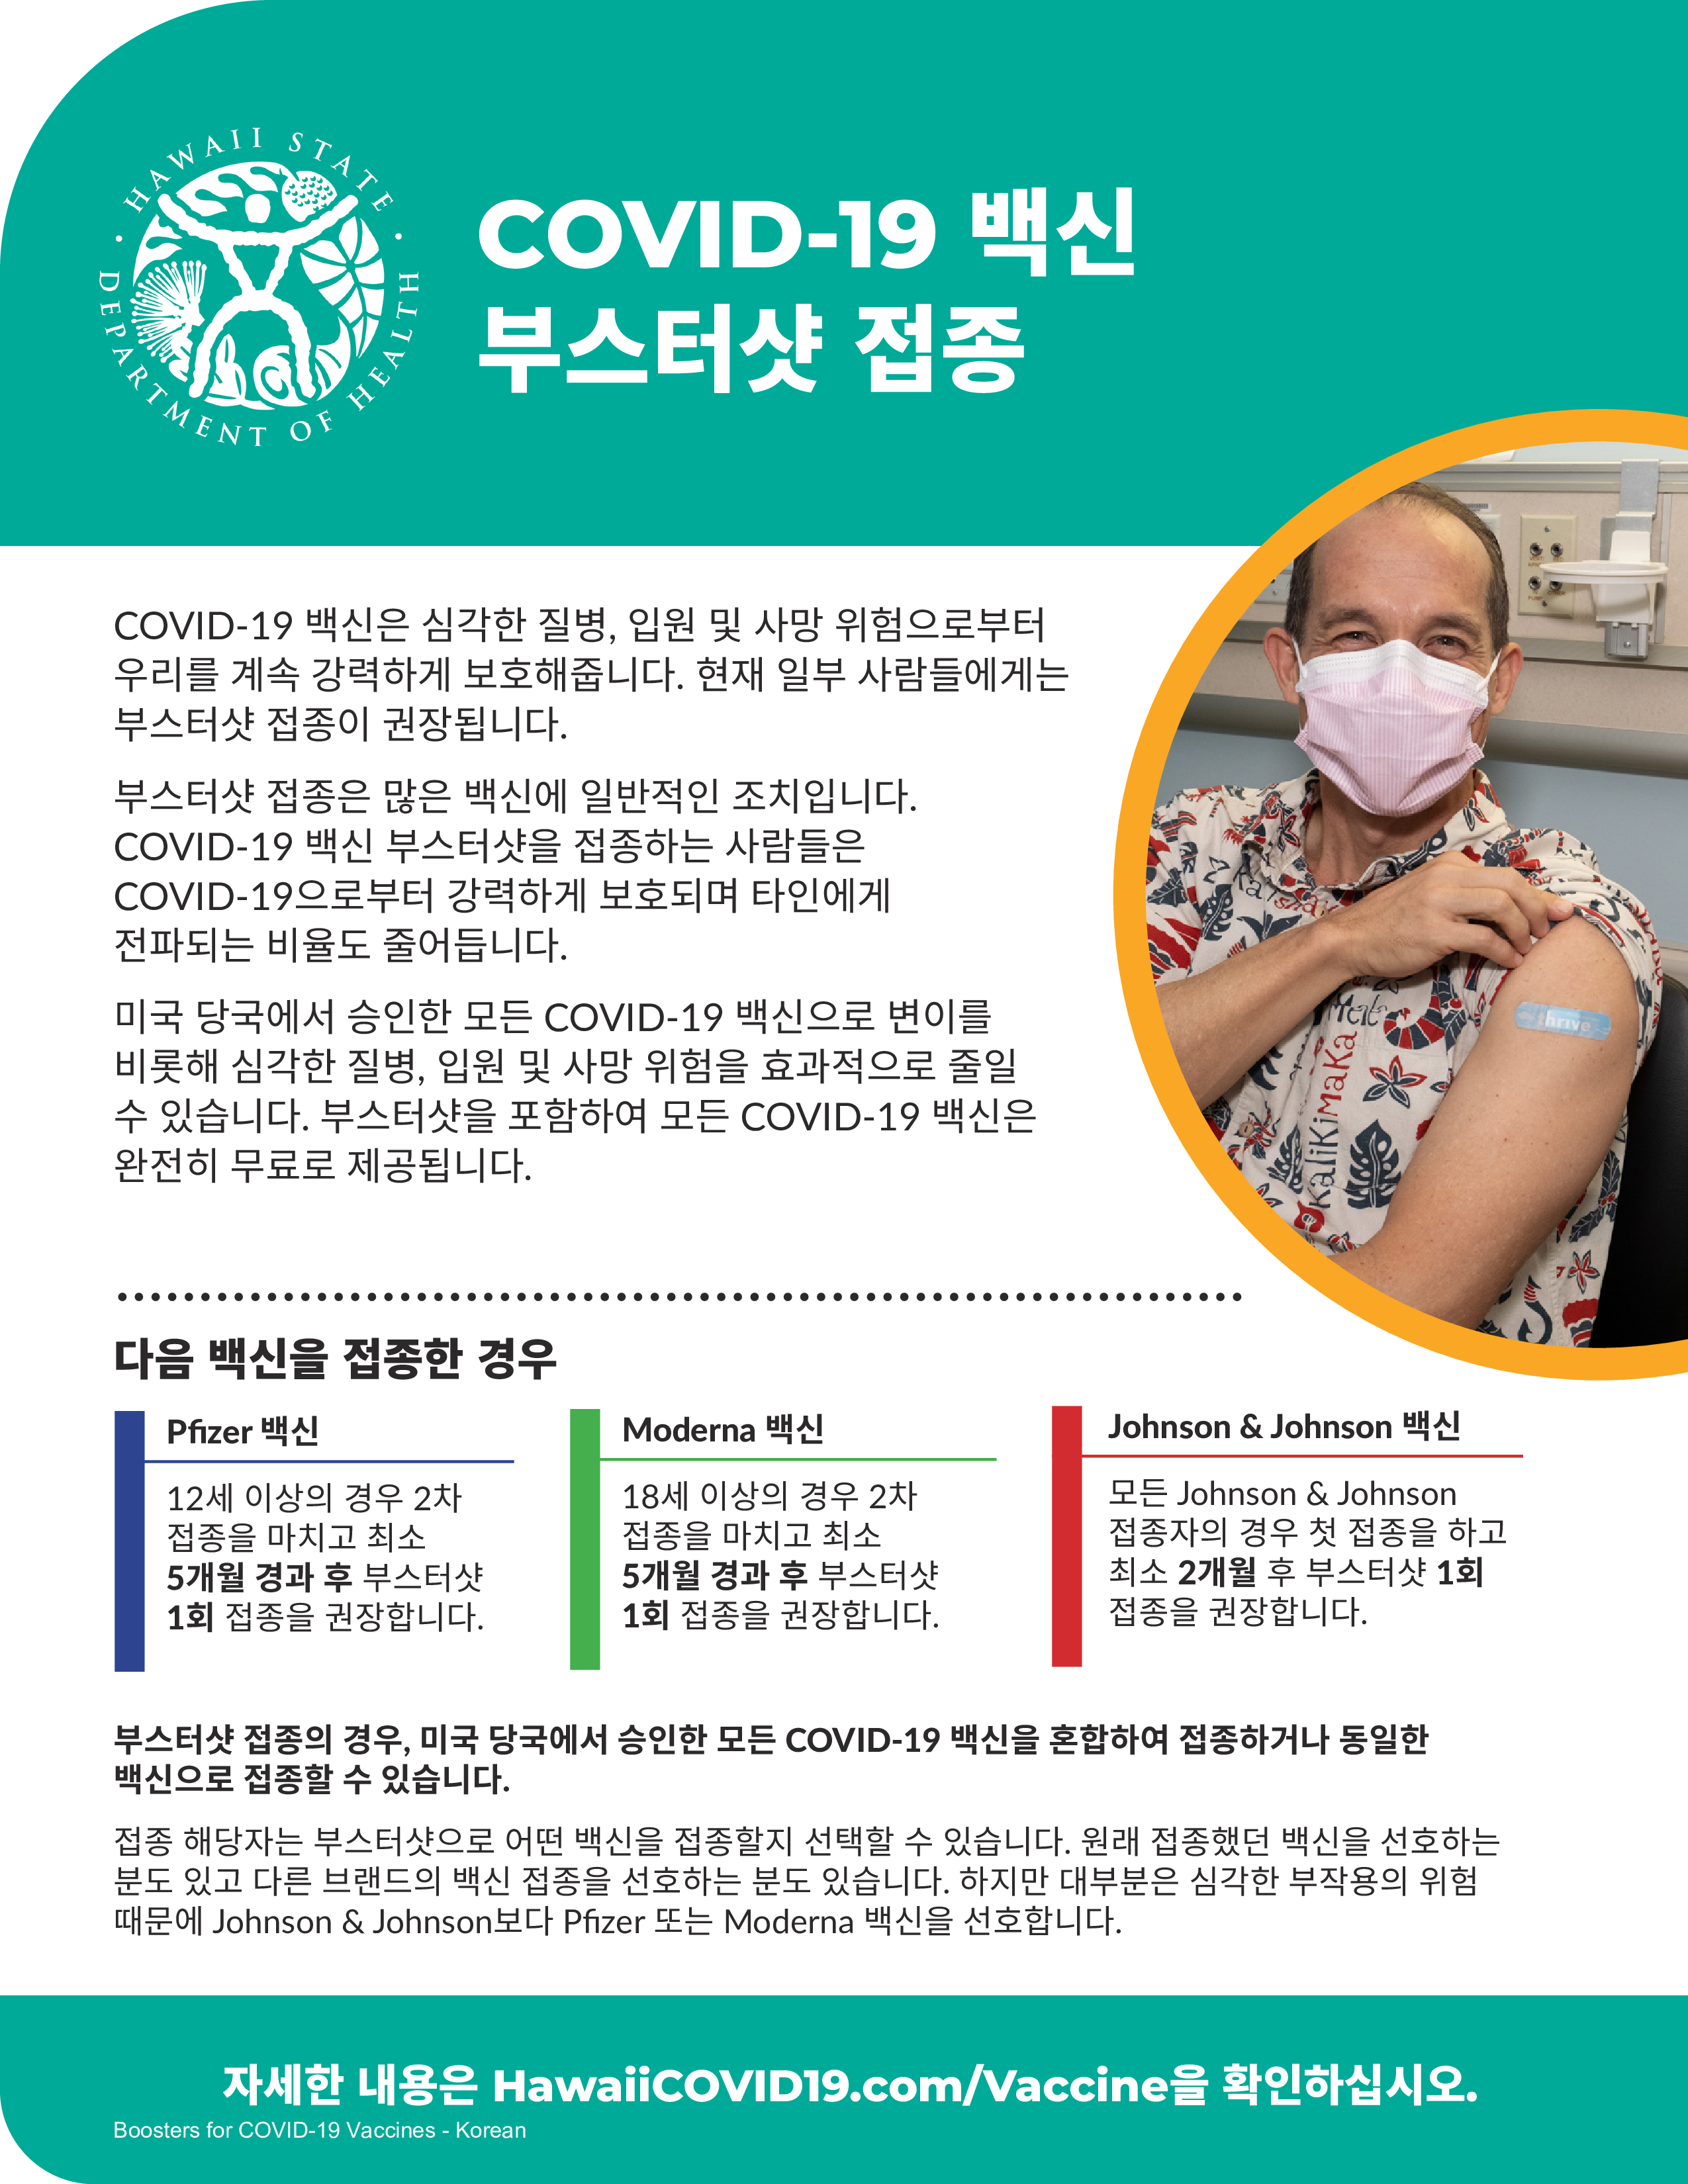 Booster factsheet in Korean.